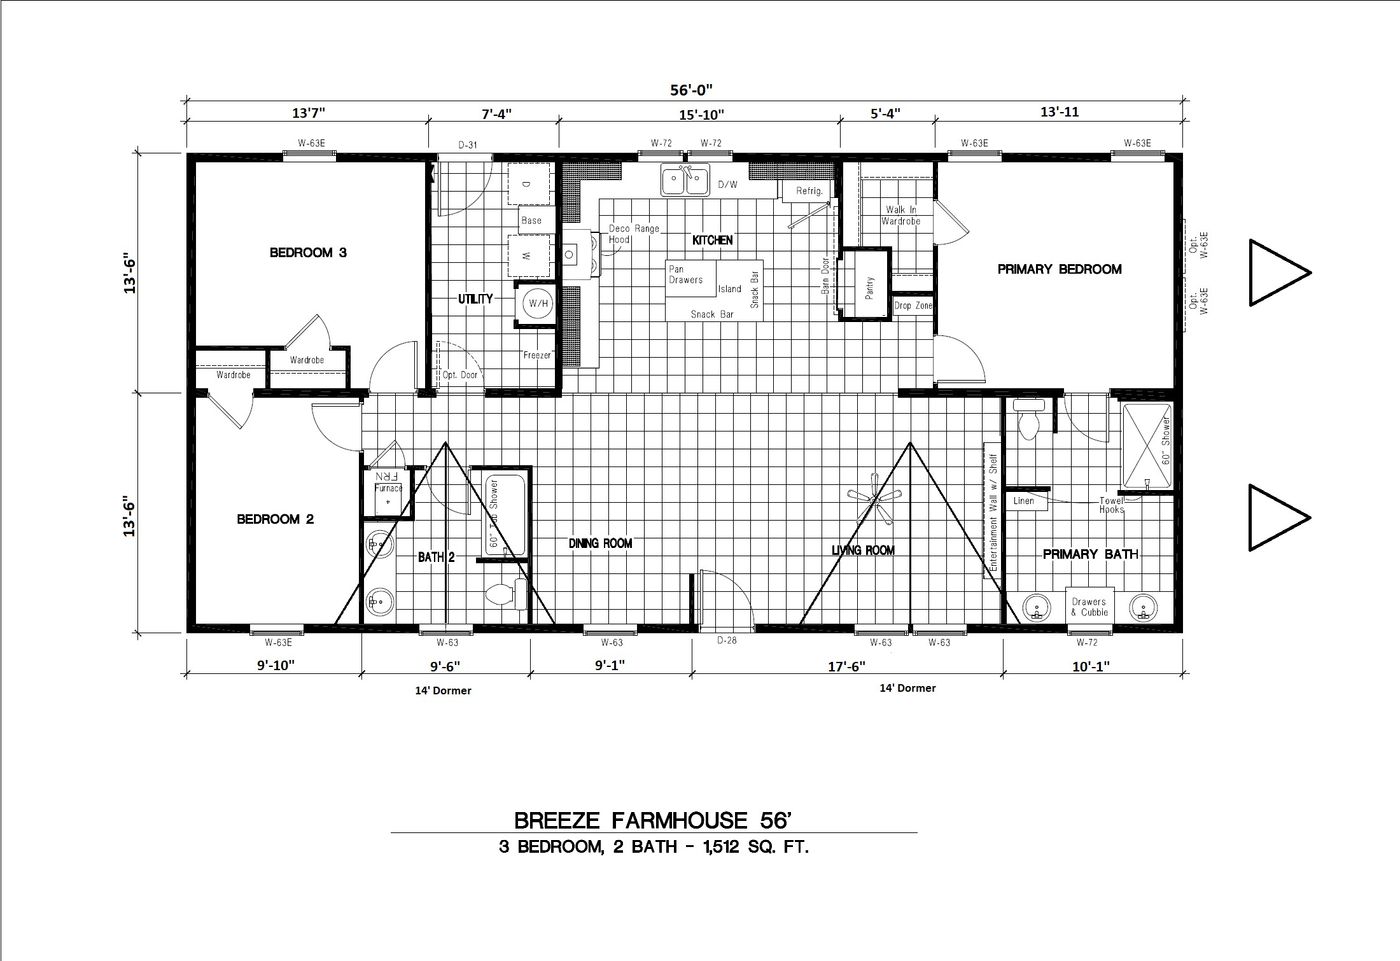 Breeze Farm House floorplan image